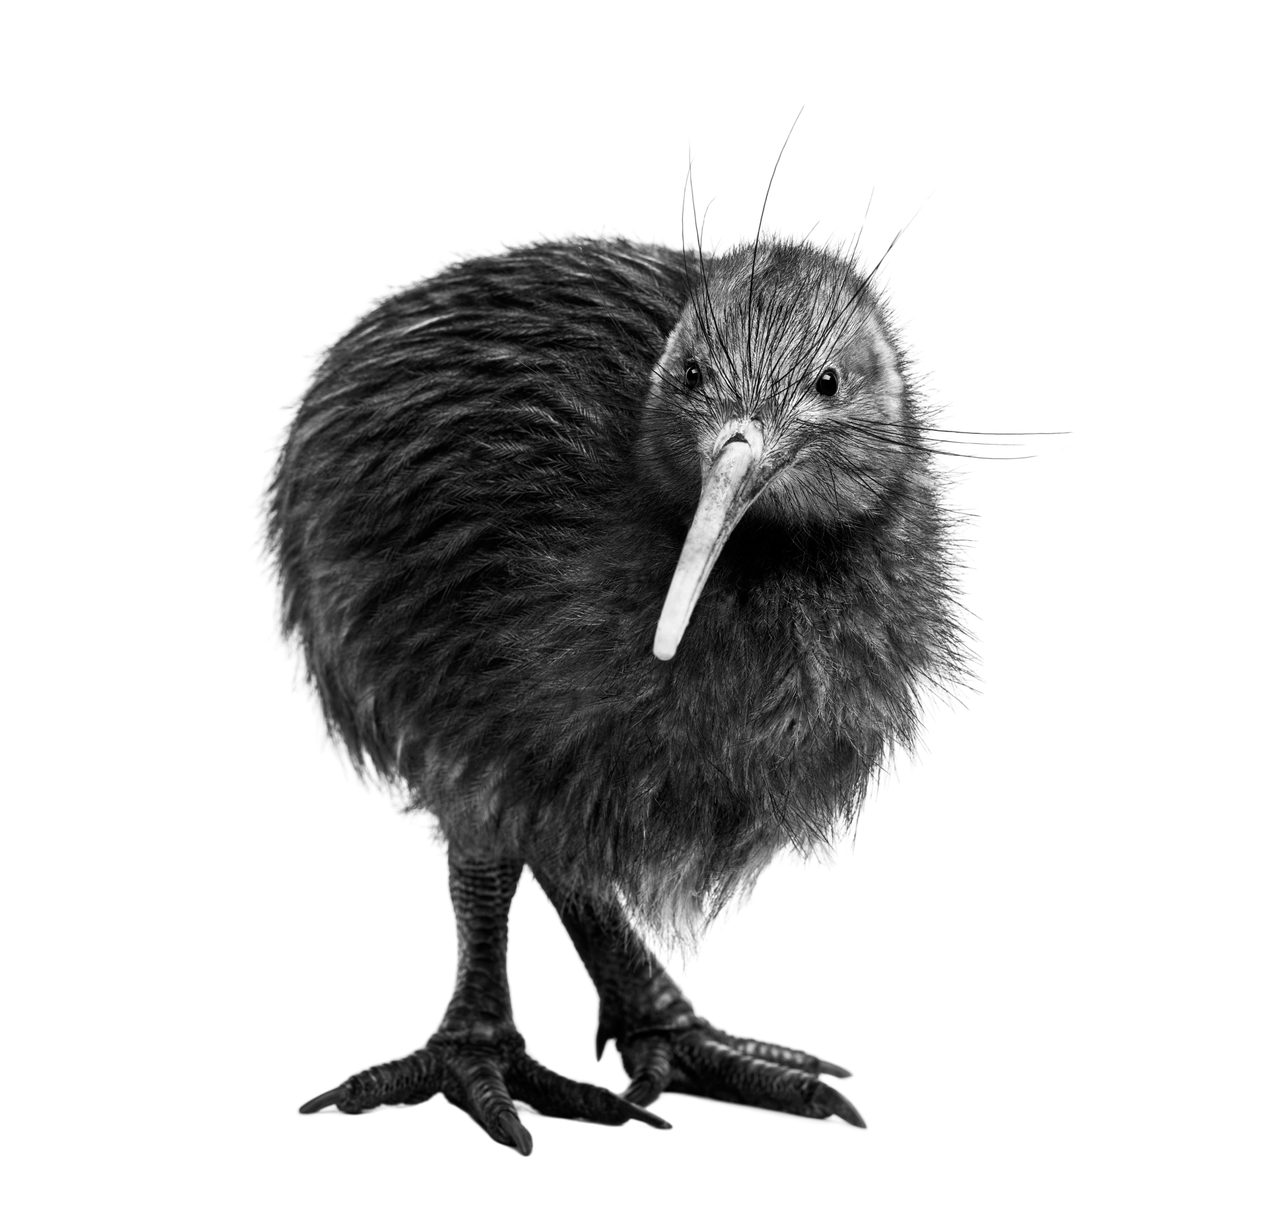 a black and white image of a kiwi bird